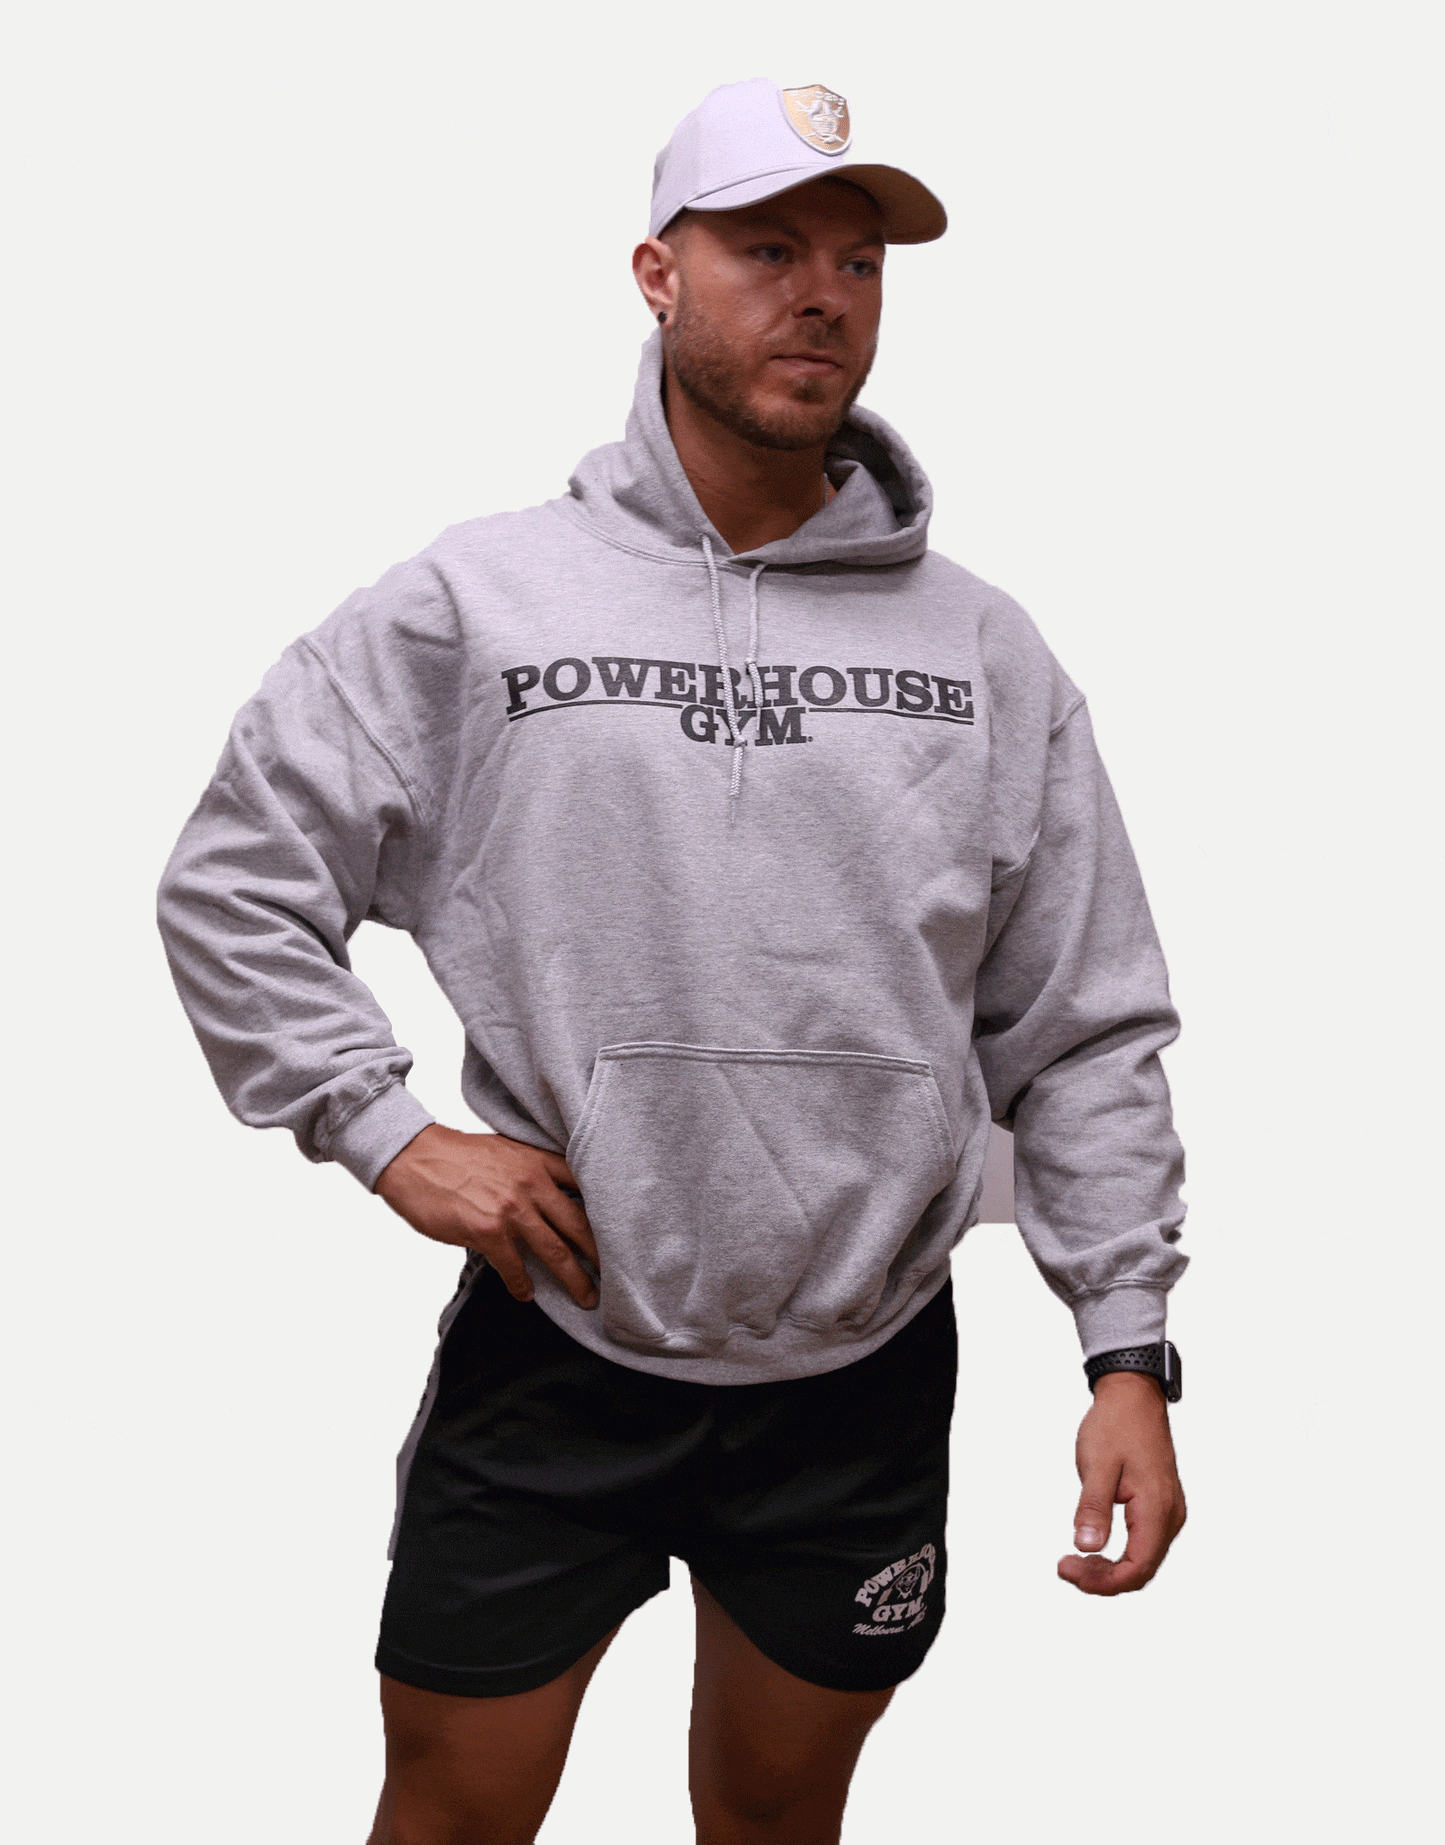 Powerhouse Gym Pro Shop Small Hoodie Grey/Black Text